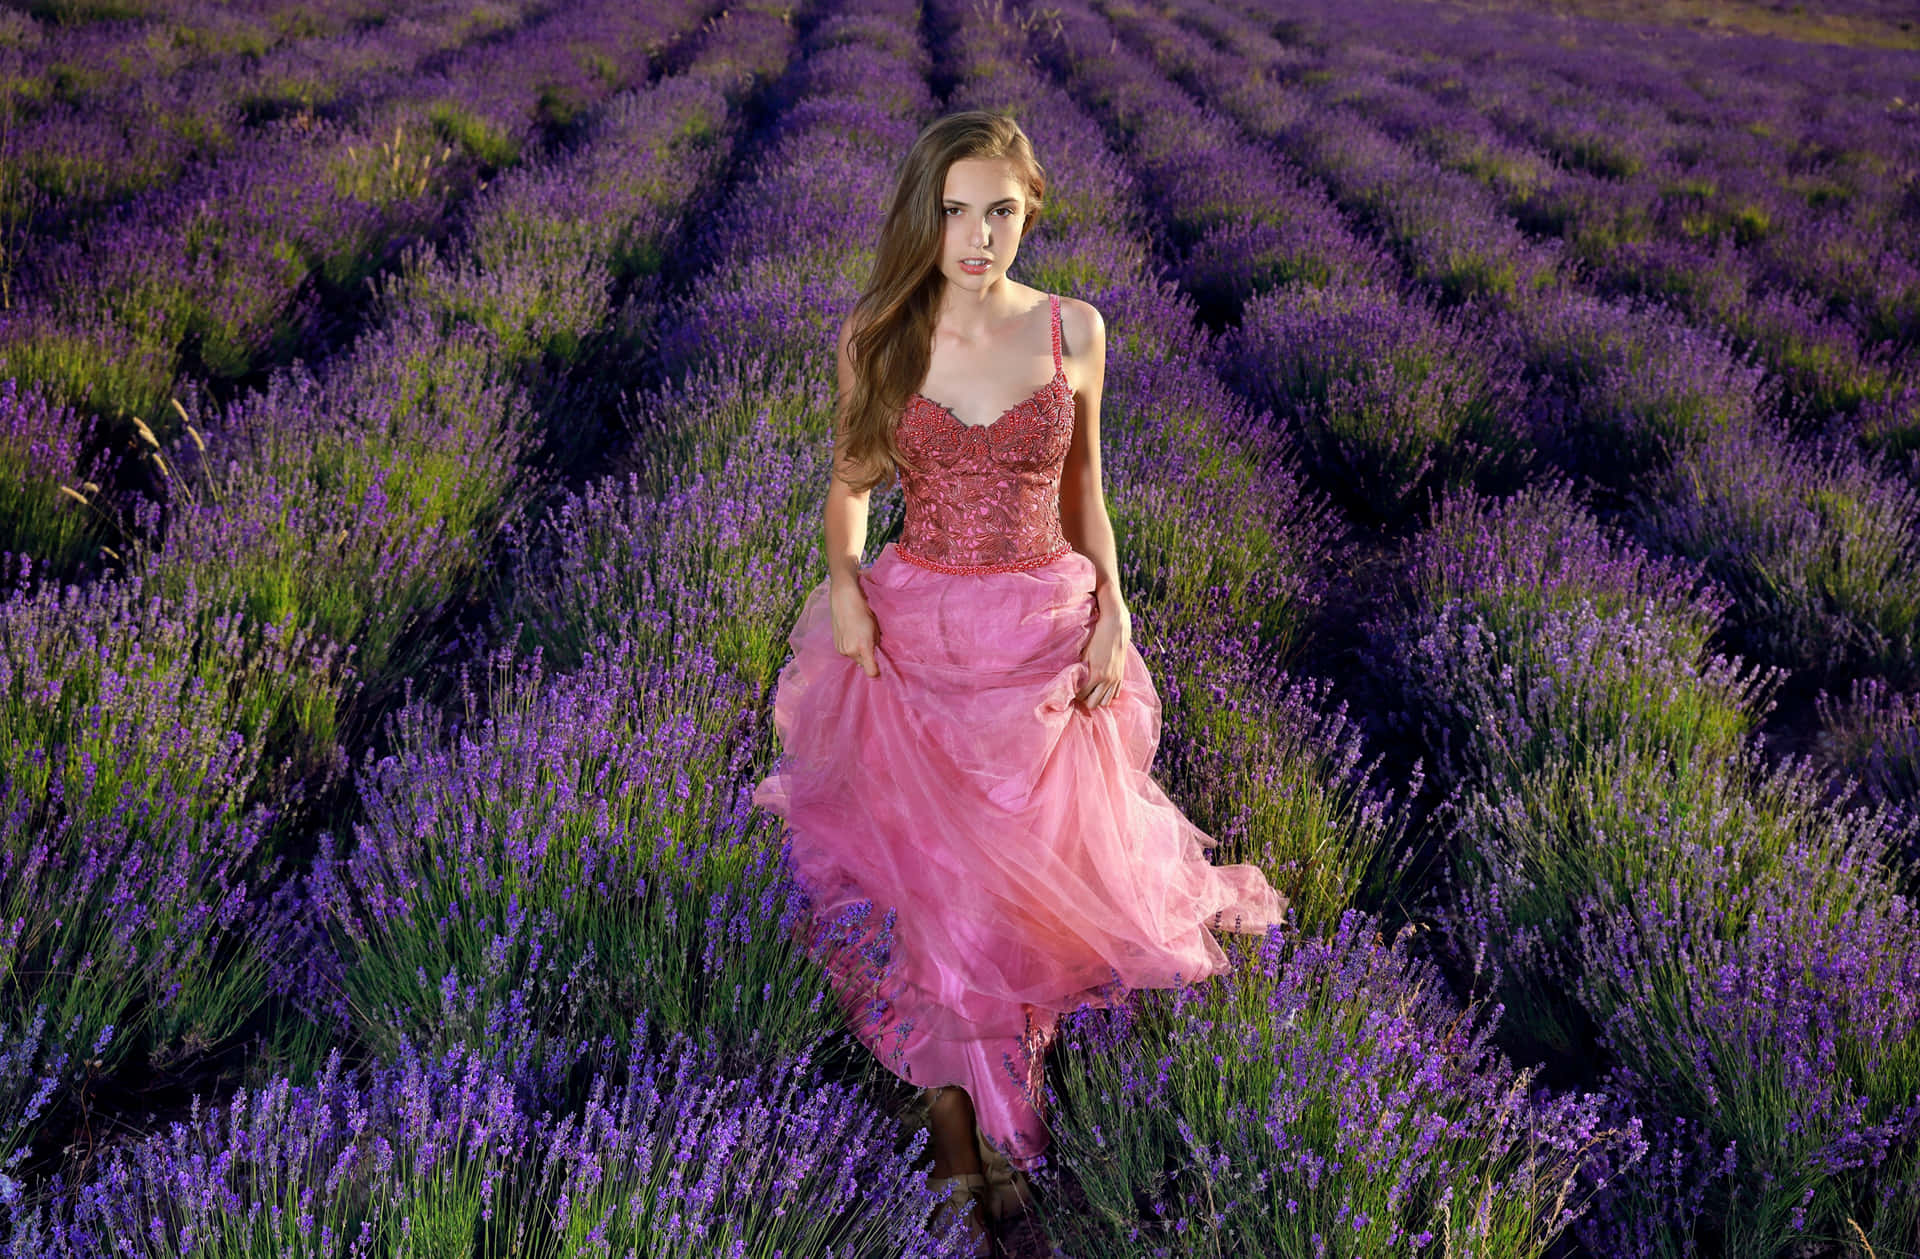 Elegant Womanin Lavender Field.jpg Wallpaper